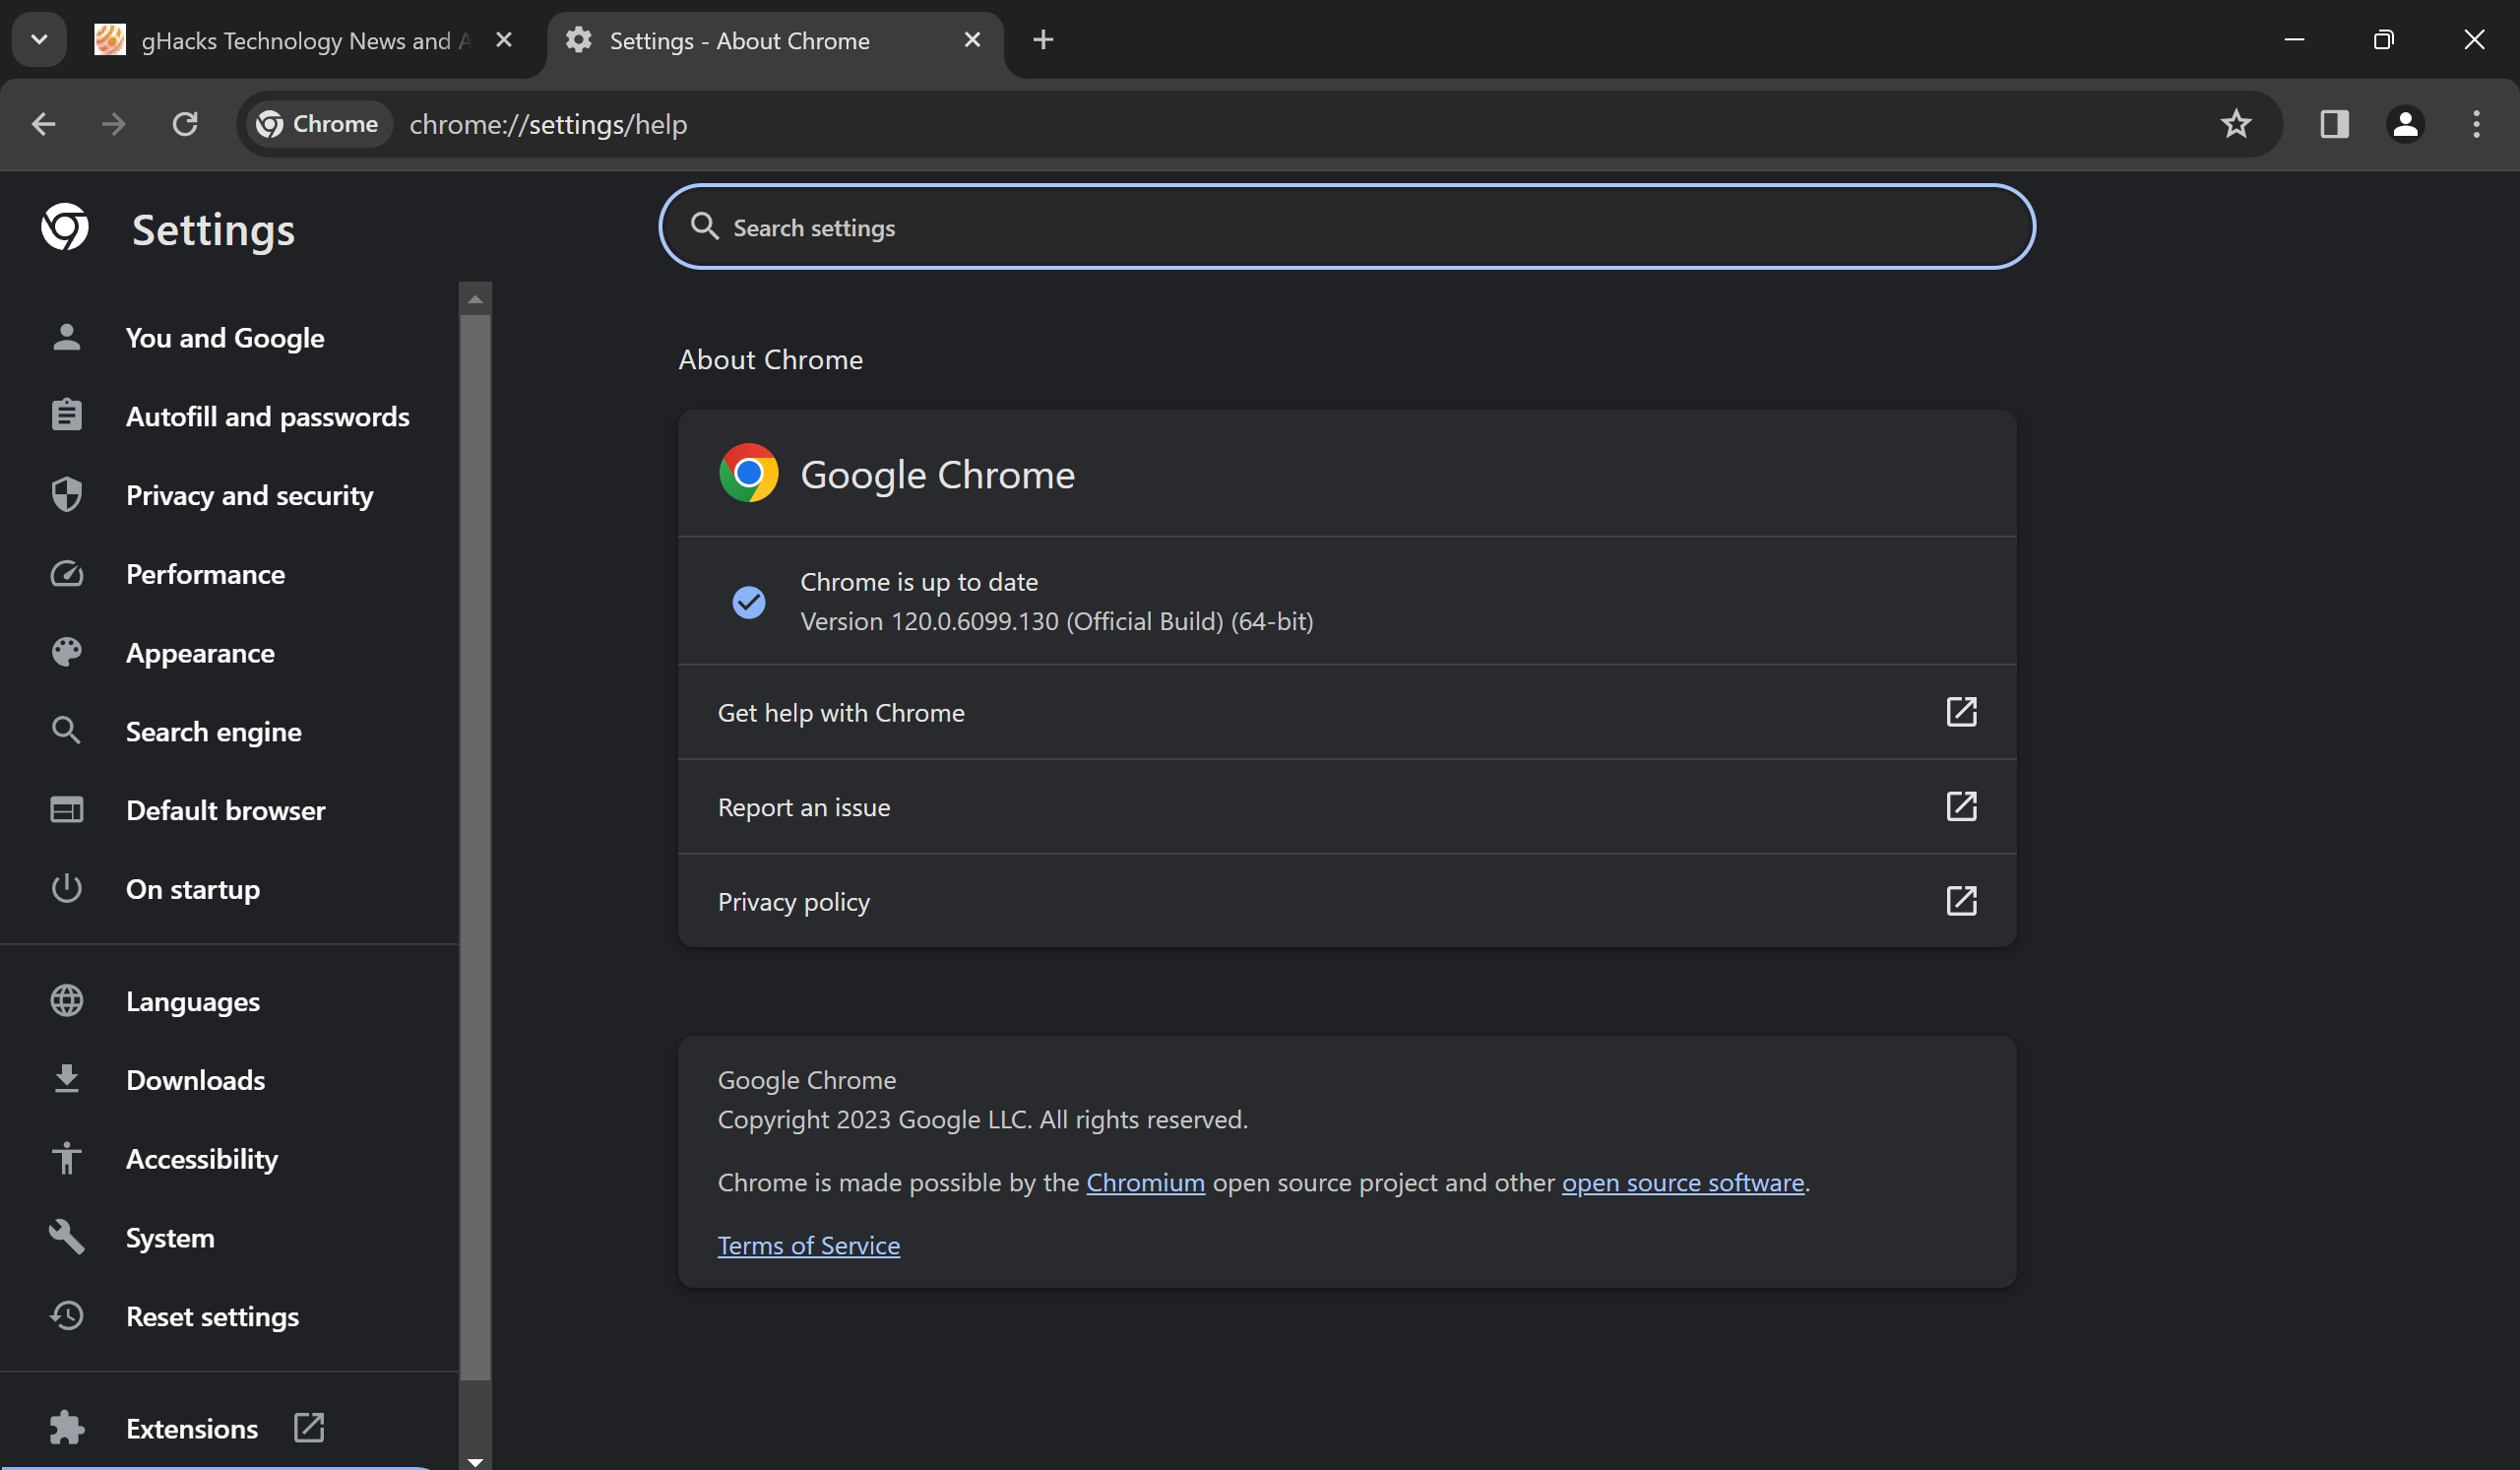 Google Chrome 0-day vulnerability